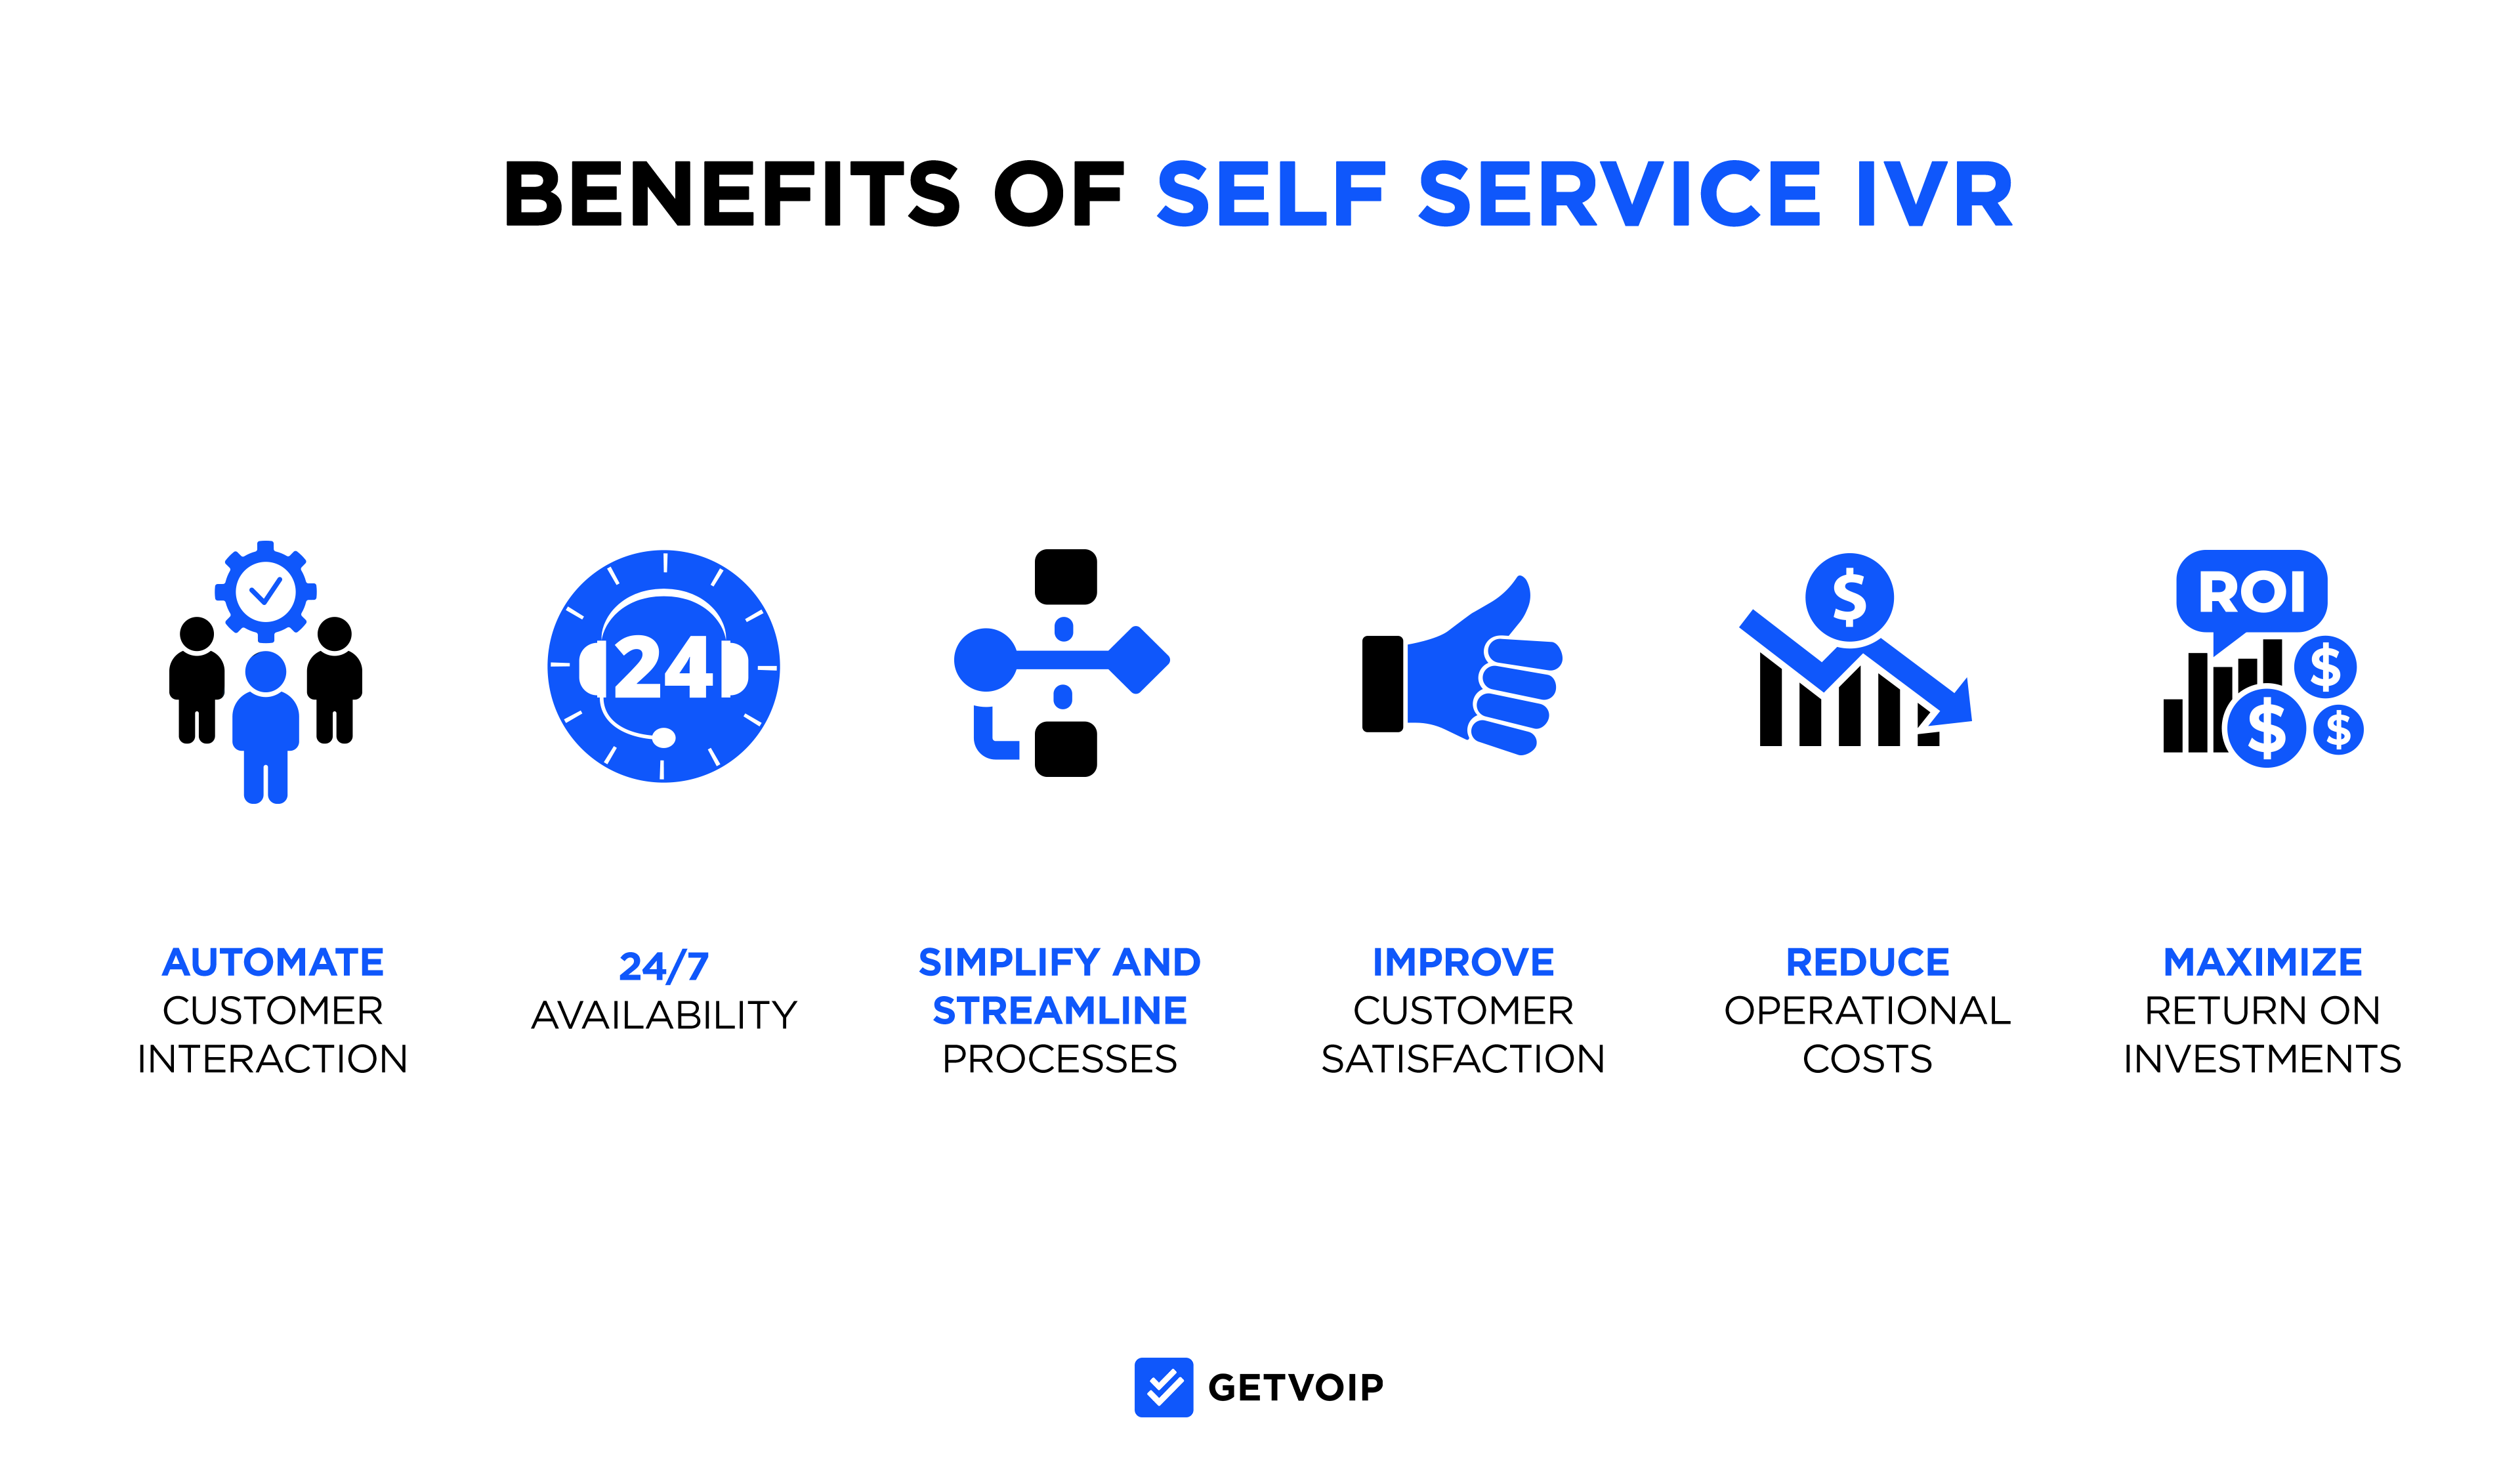 Benefits of Self Service IVR